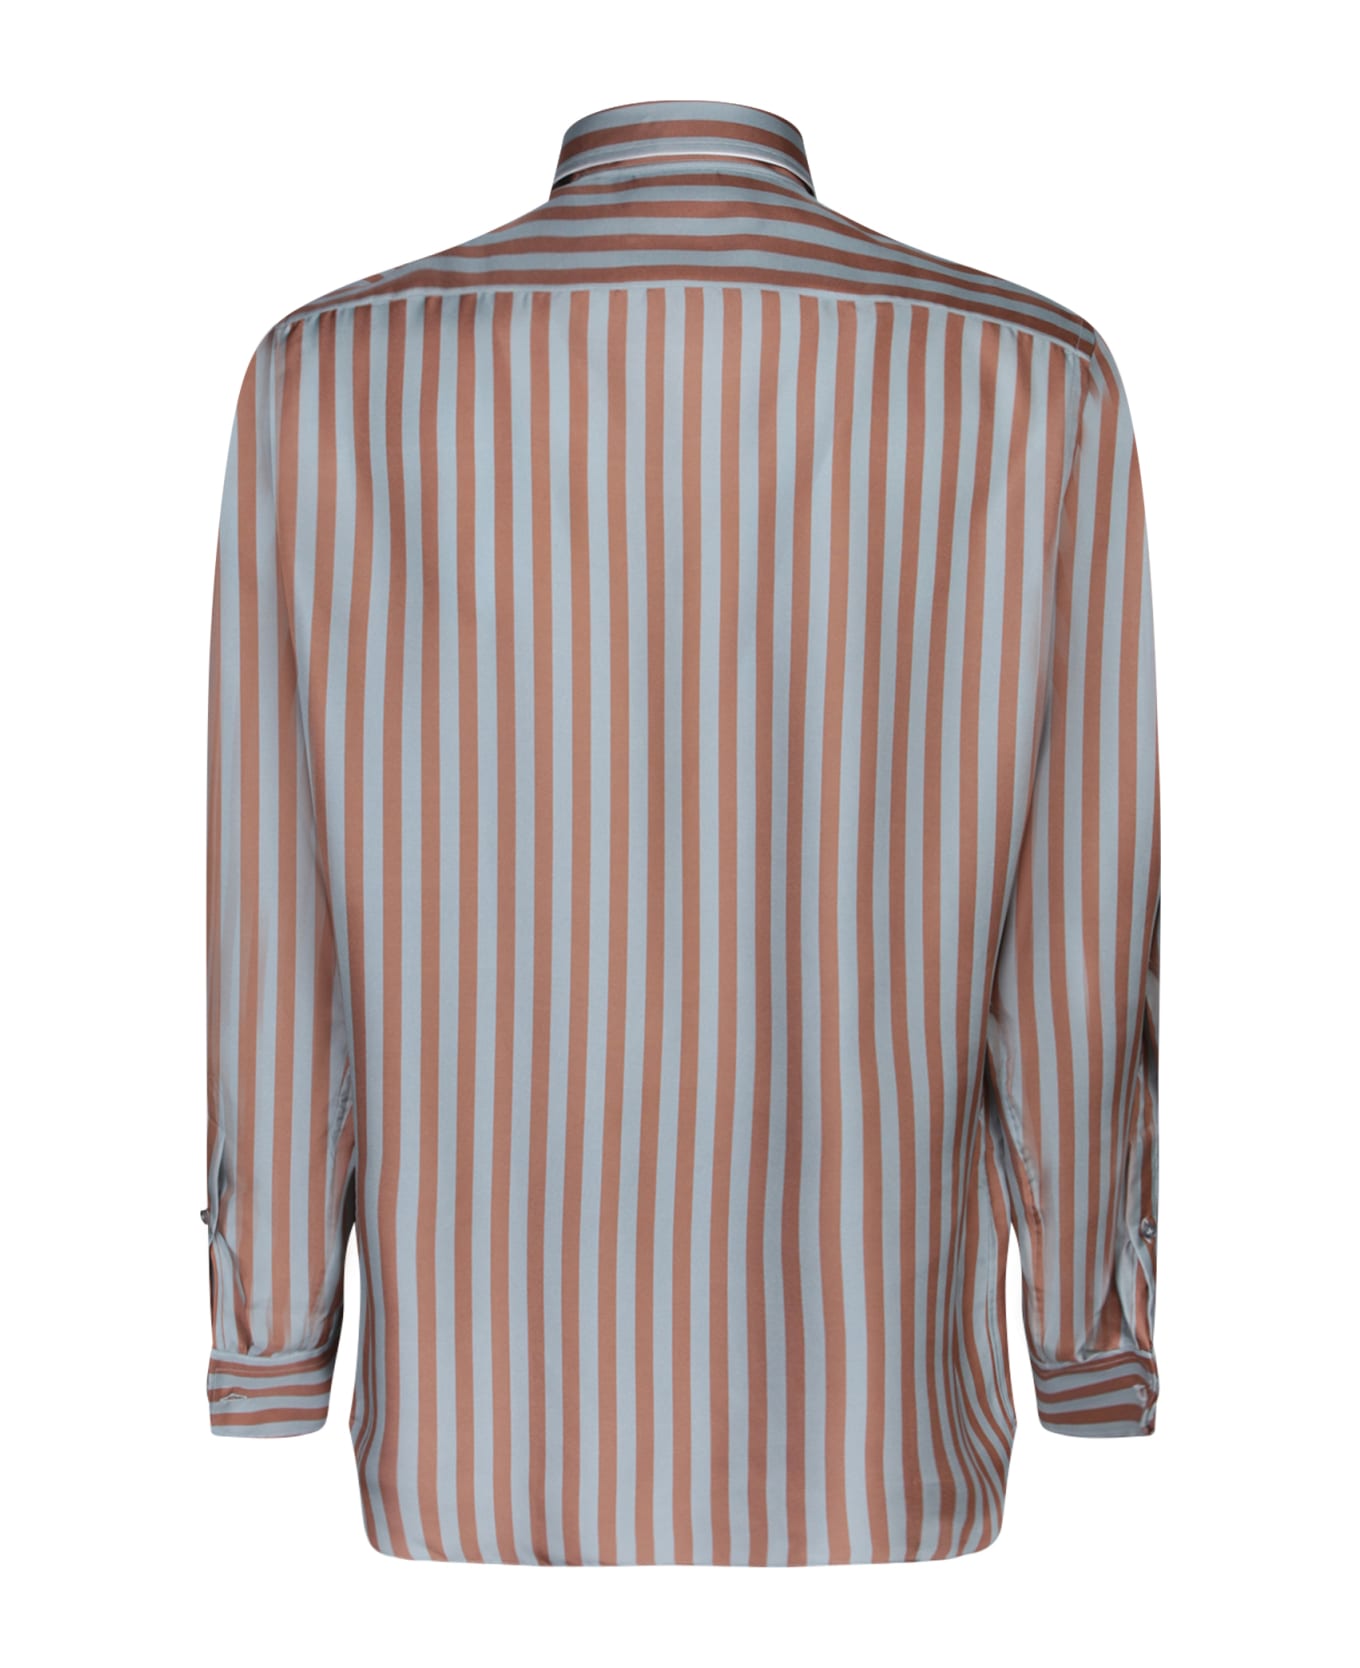 Lardini Ted Striped Light Blue/brown Shirt - Brown